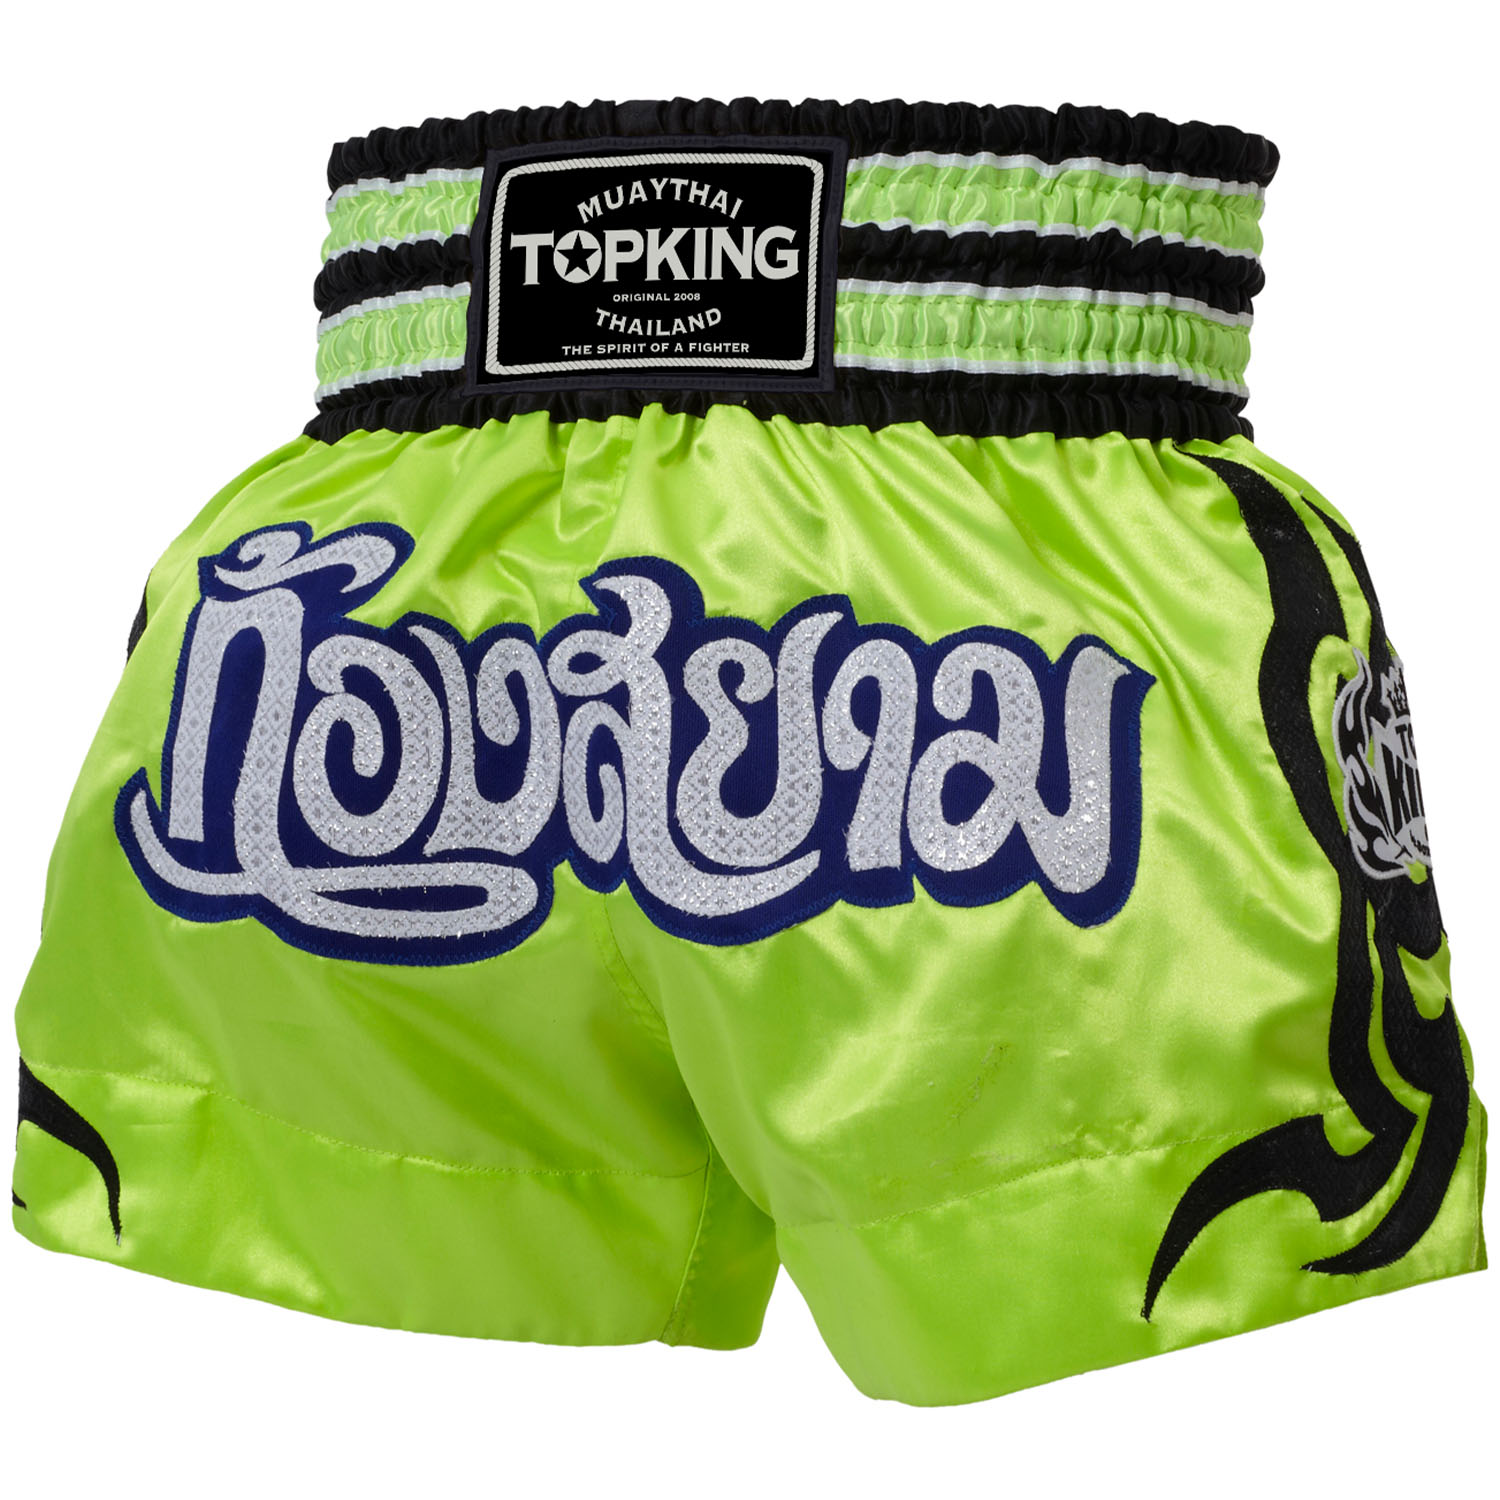 TOP KING BOXING Muay Thai Shorts, TKTBS 087, green